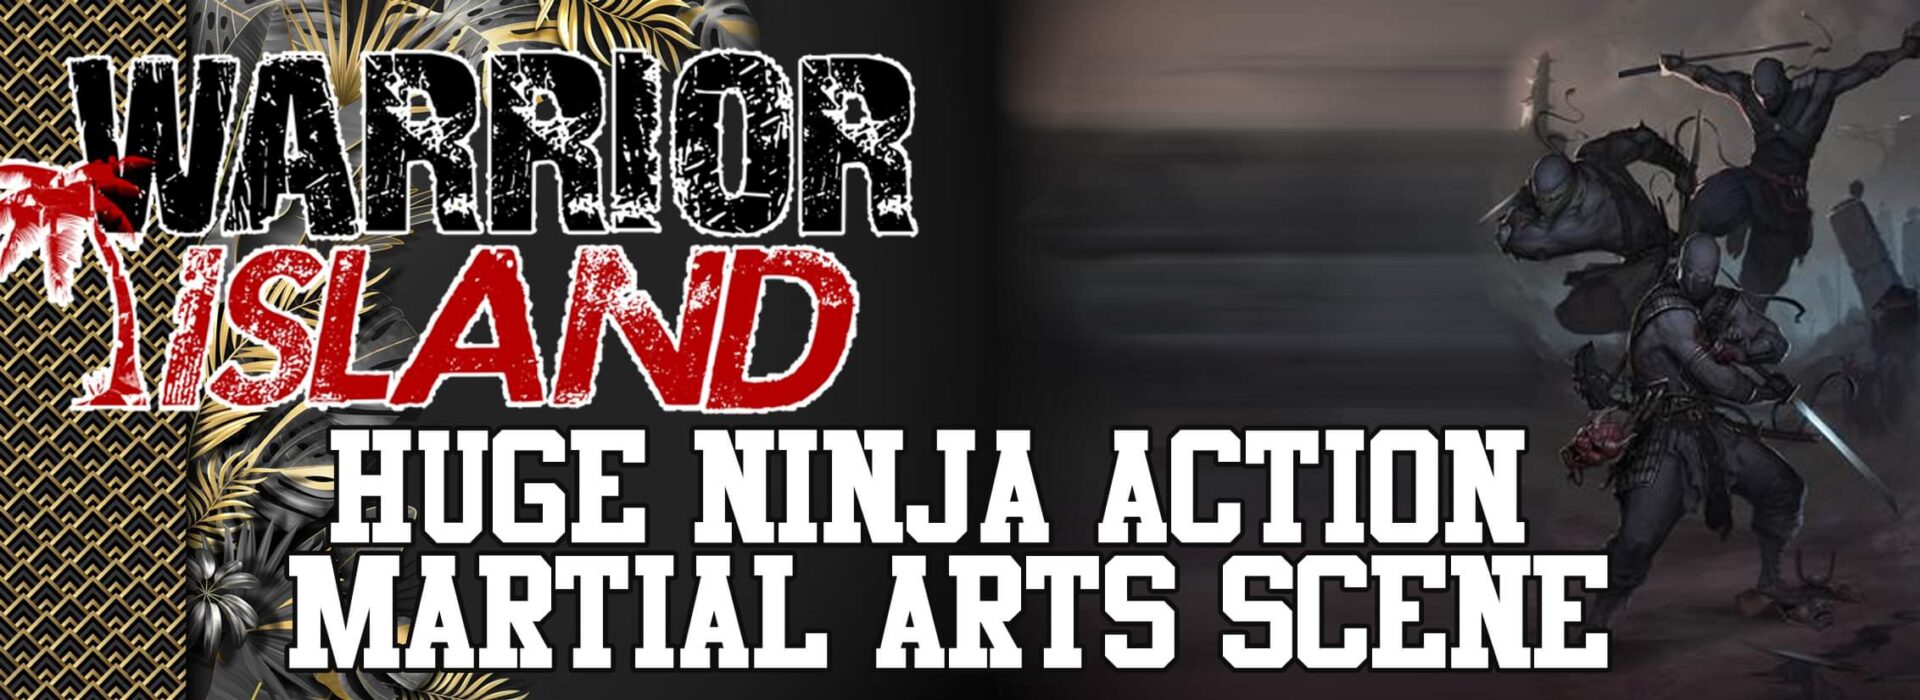 Huge Ninja Action Scene cover image of Warrior Island